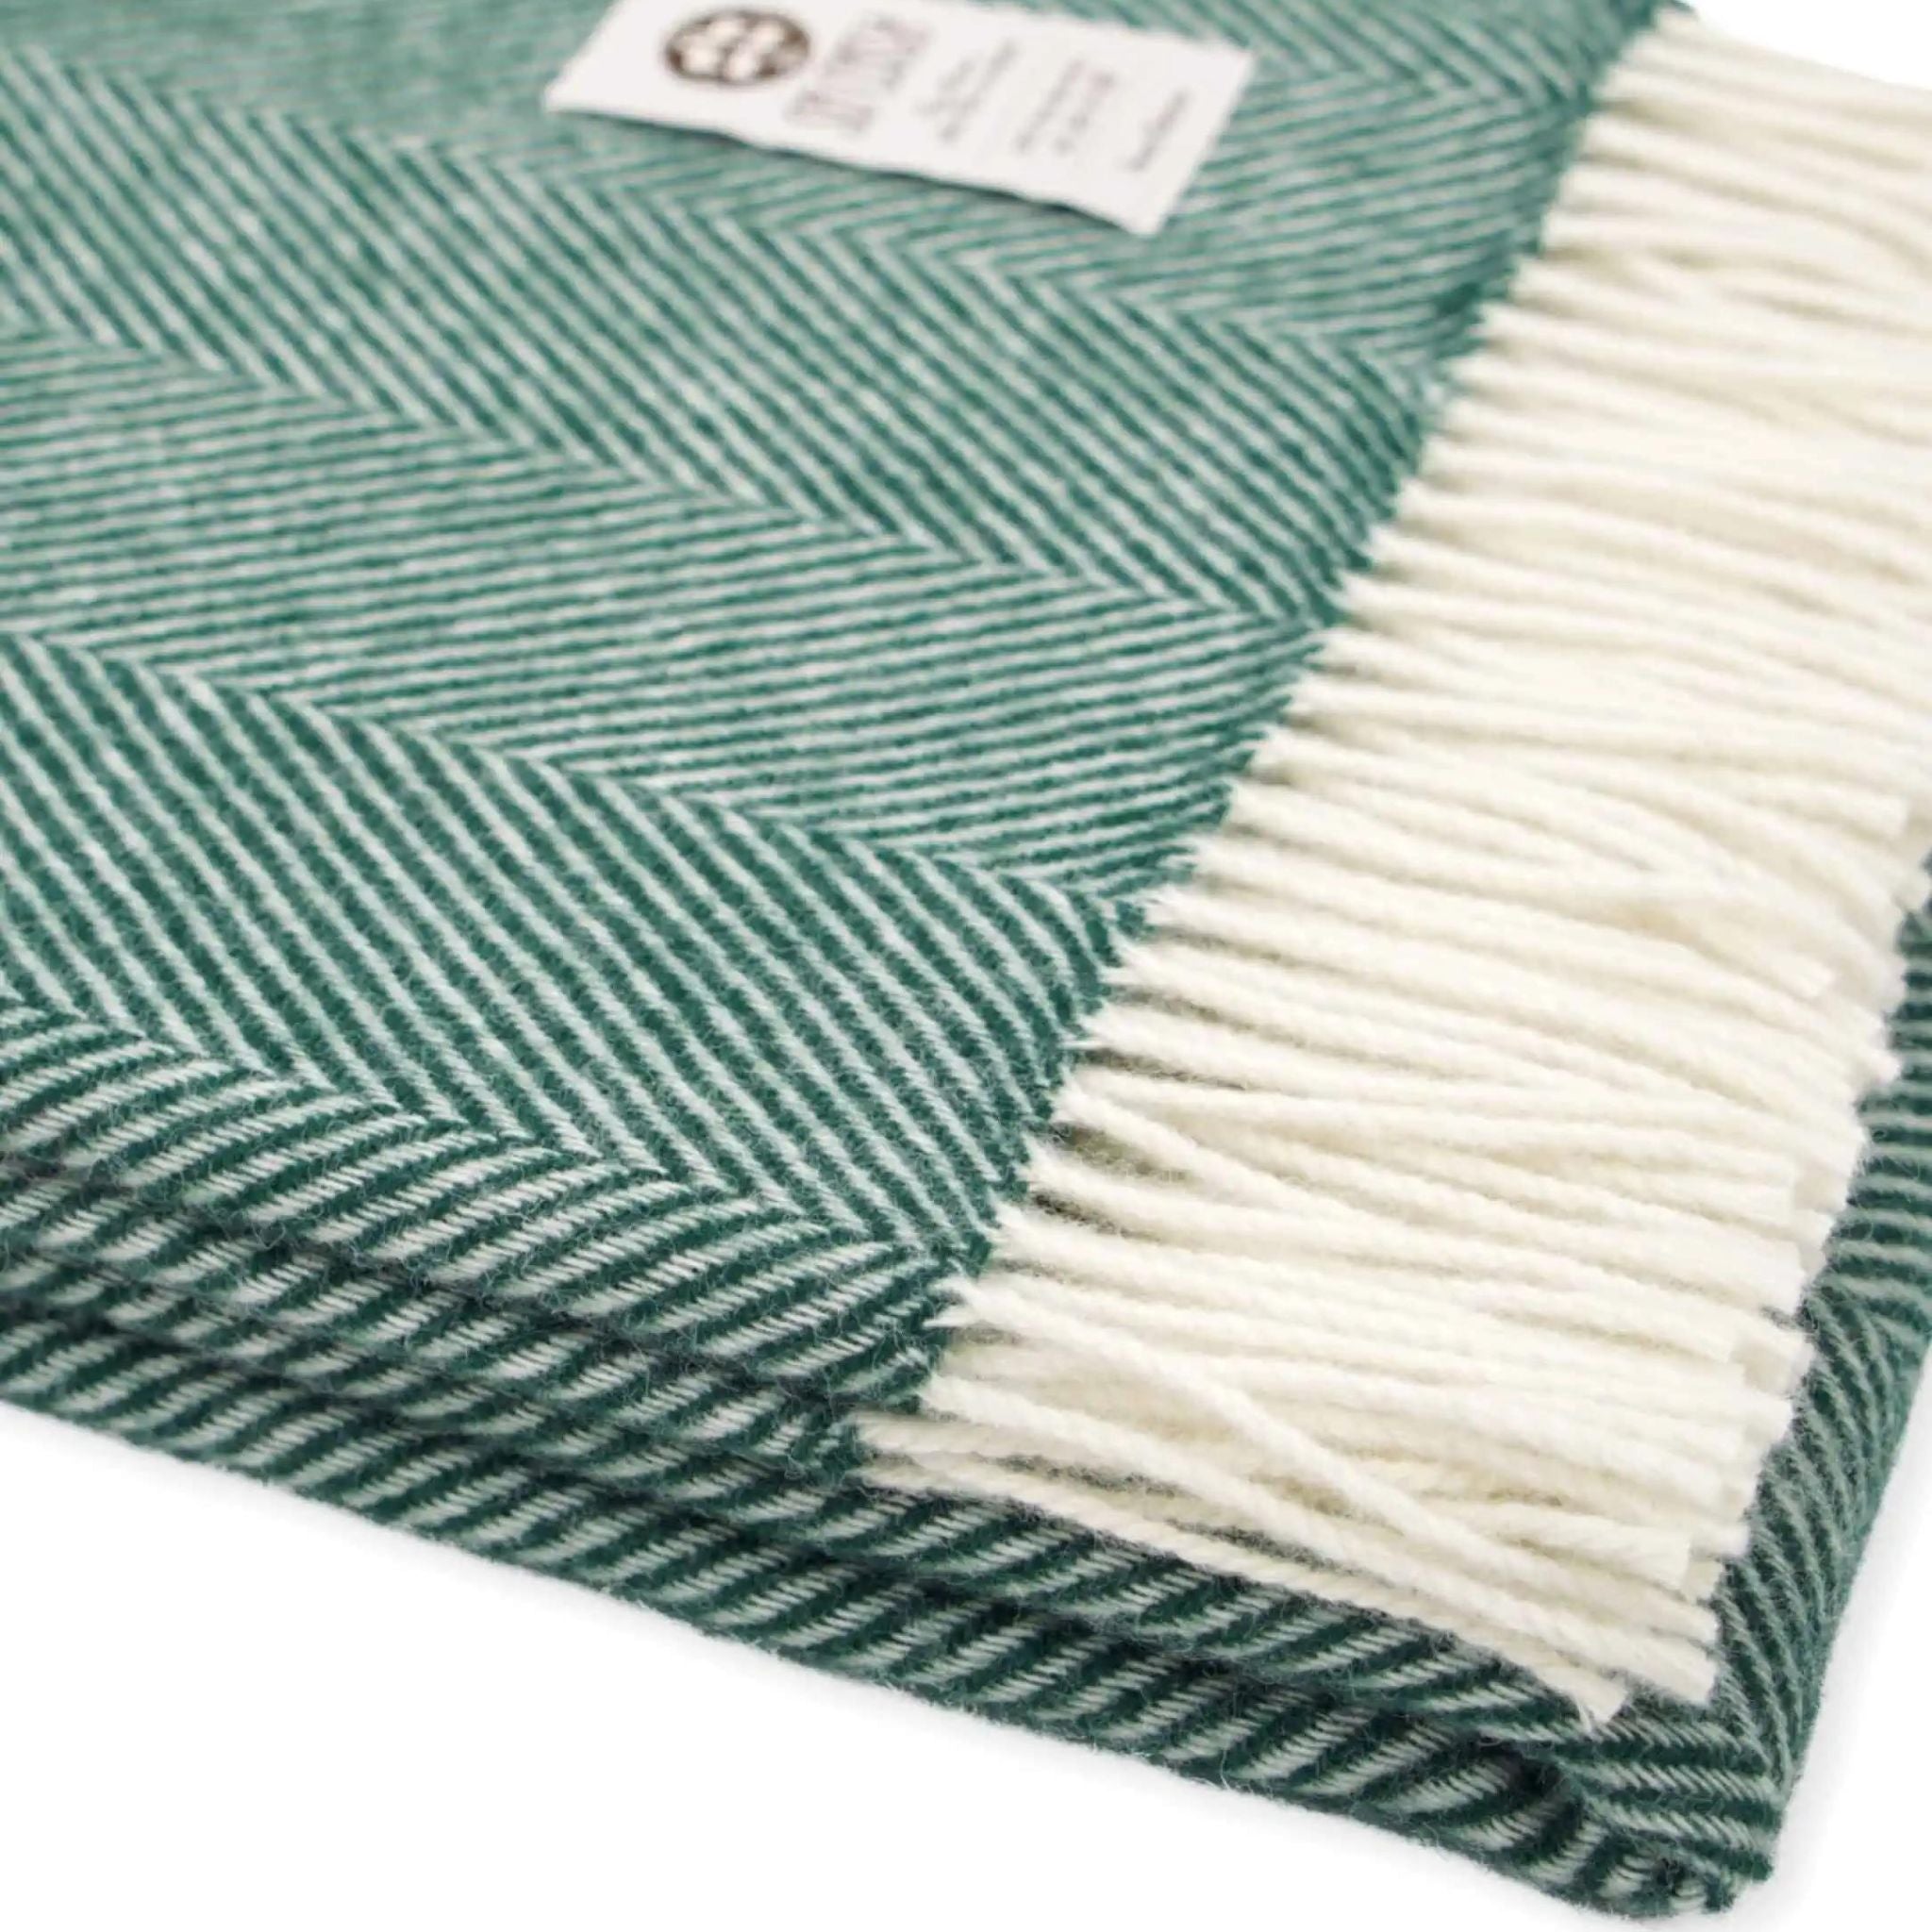 Eden Green and White Pure New Wool Herringbone Dani Throw (190cm x 130cm) - Close in